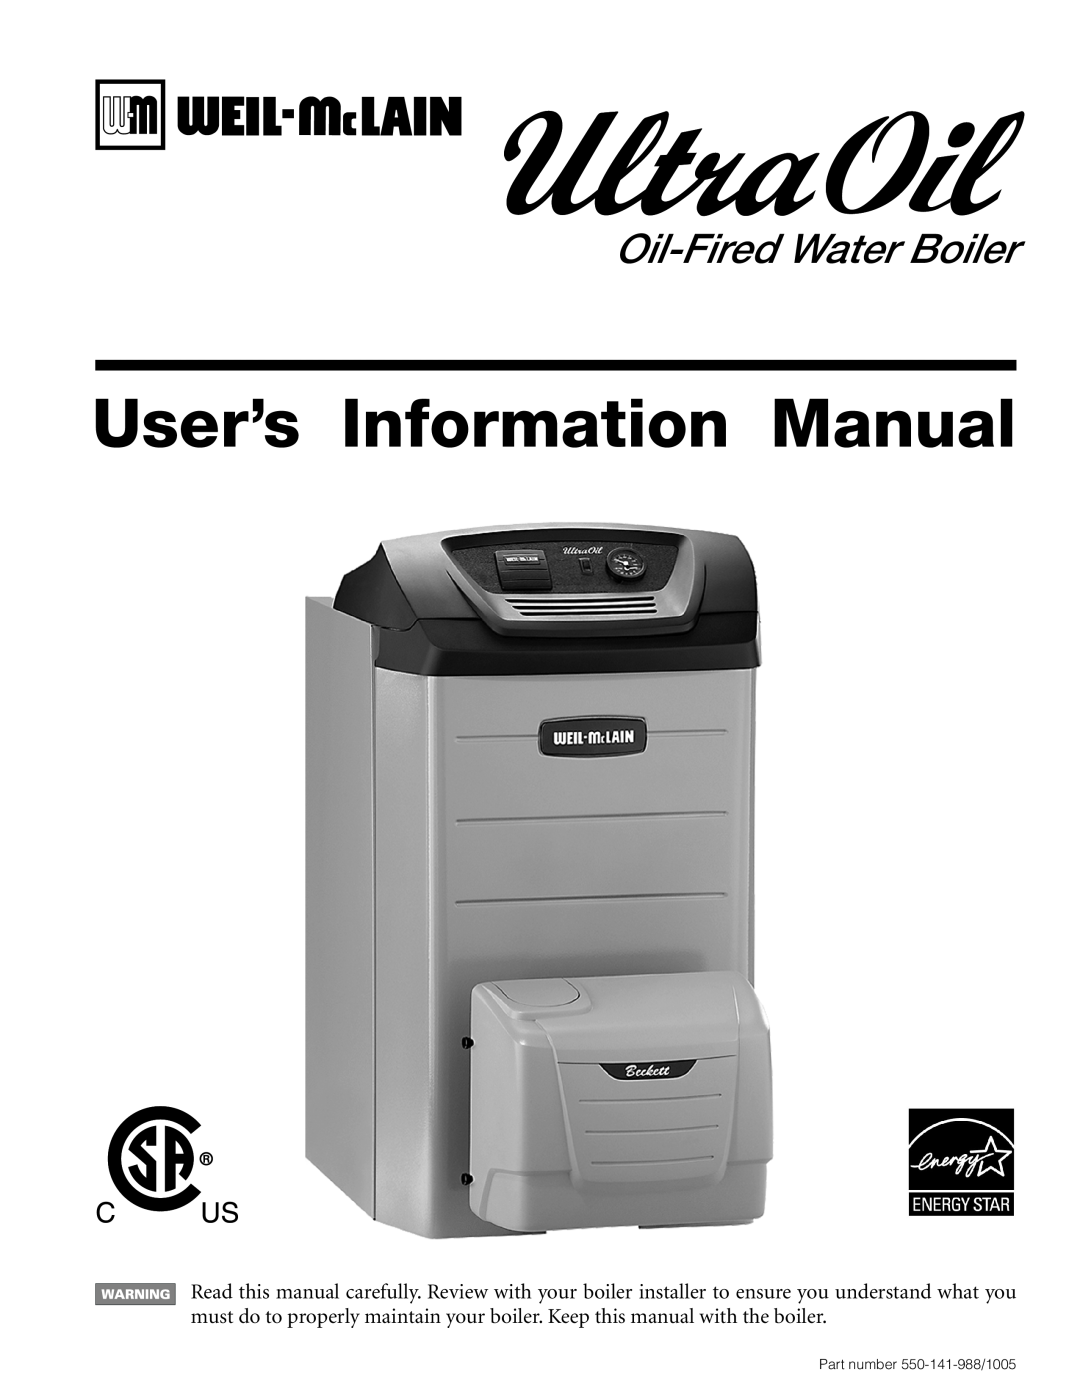 Weil-McLain Oil-Fired Water Boiler manual User’s Information Manual, Oil-FiredWater Boiler, Part number 550-141-988/1005 